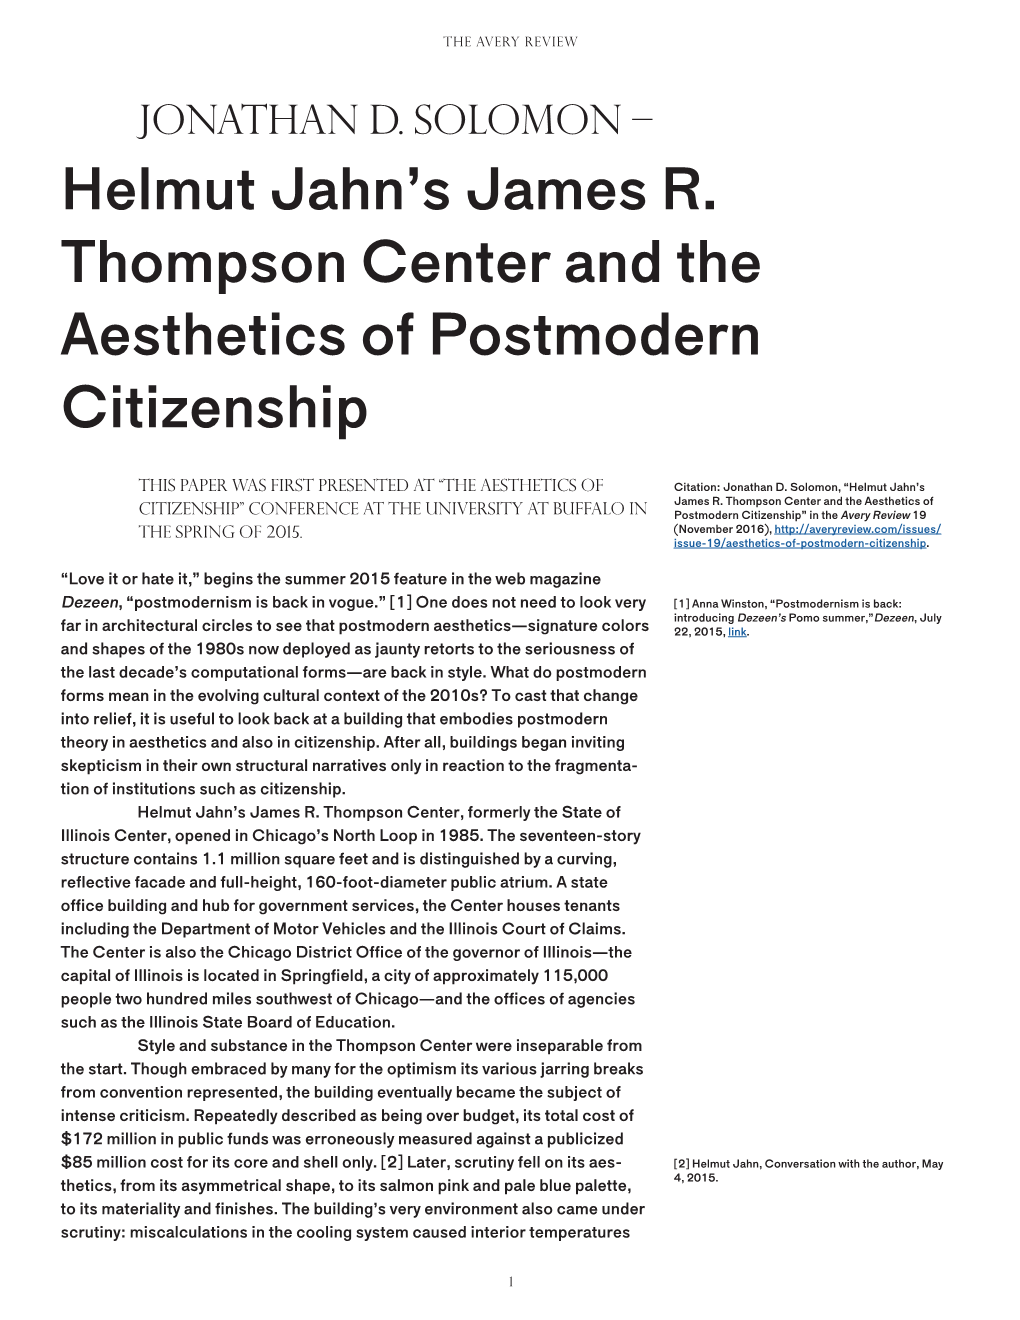 Helmut Jahn's James R. Thompson Center and the Aesthetics Of